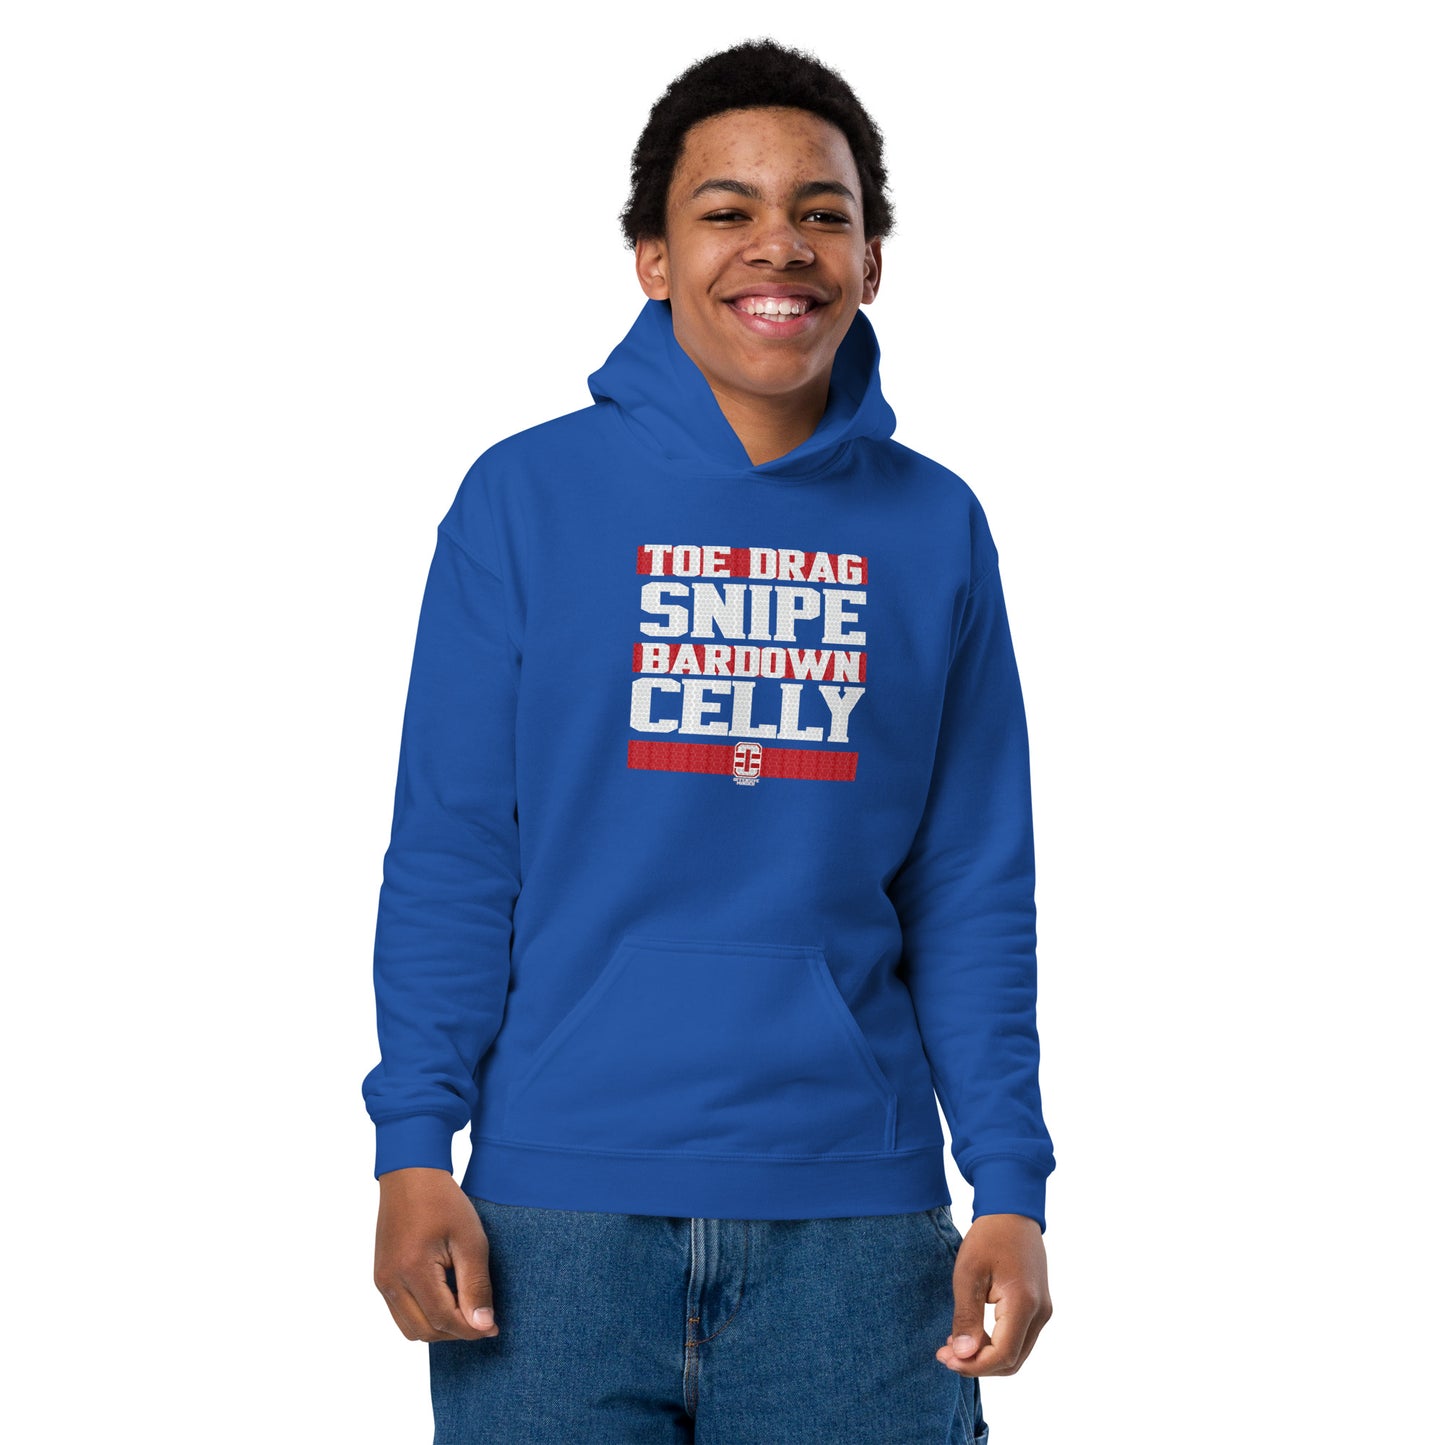 TDBDSC Youth heavy blend hoodie